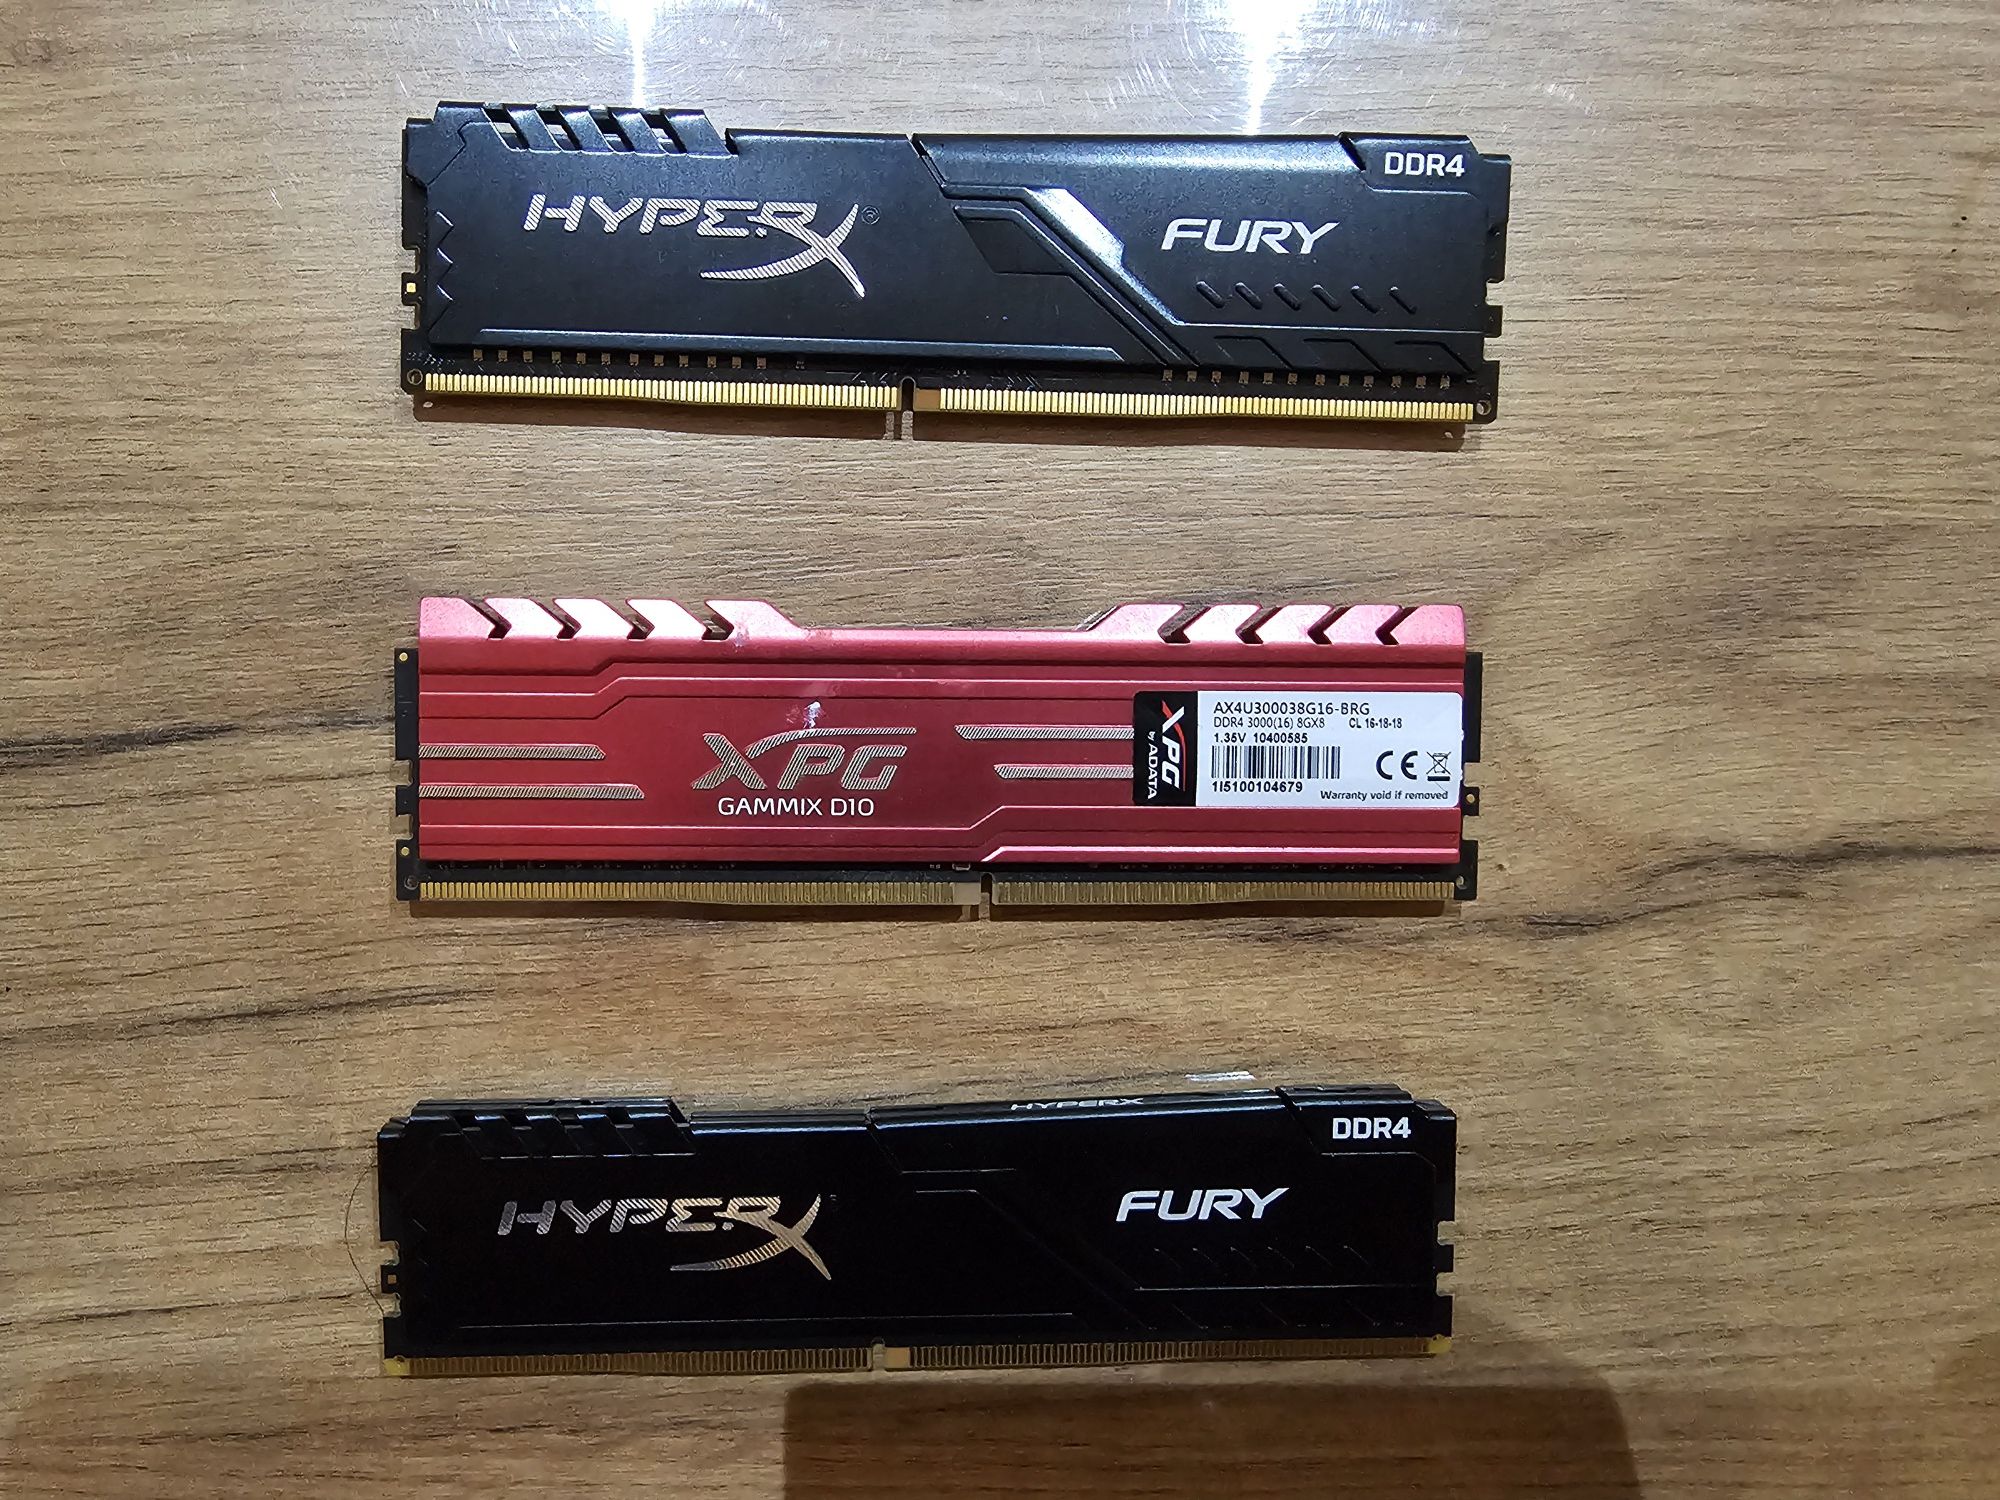 HyperX / XPG GAMMIX D10 DDR4 3000mhz 4/8GB